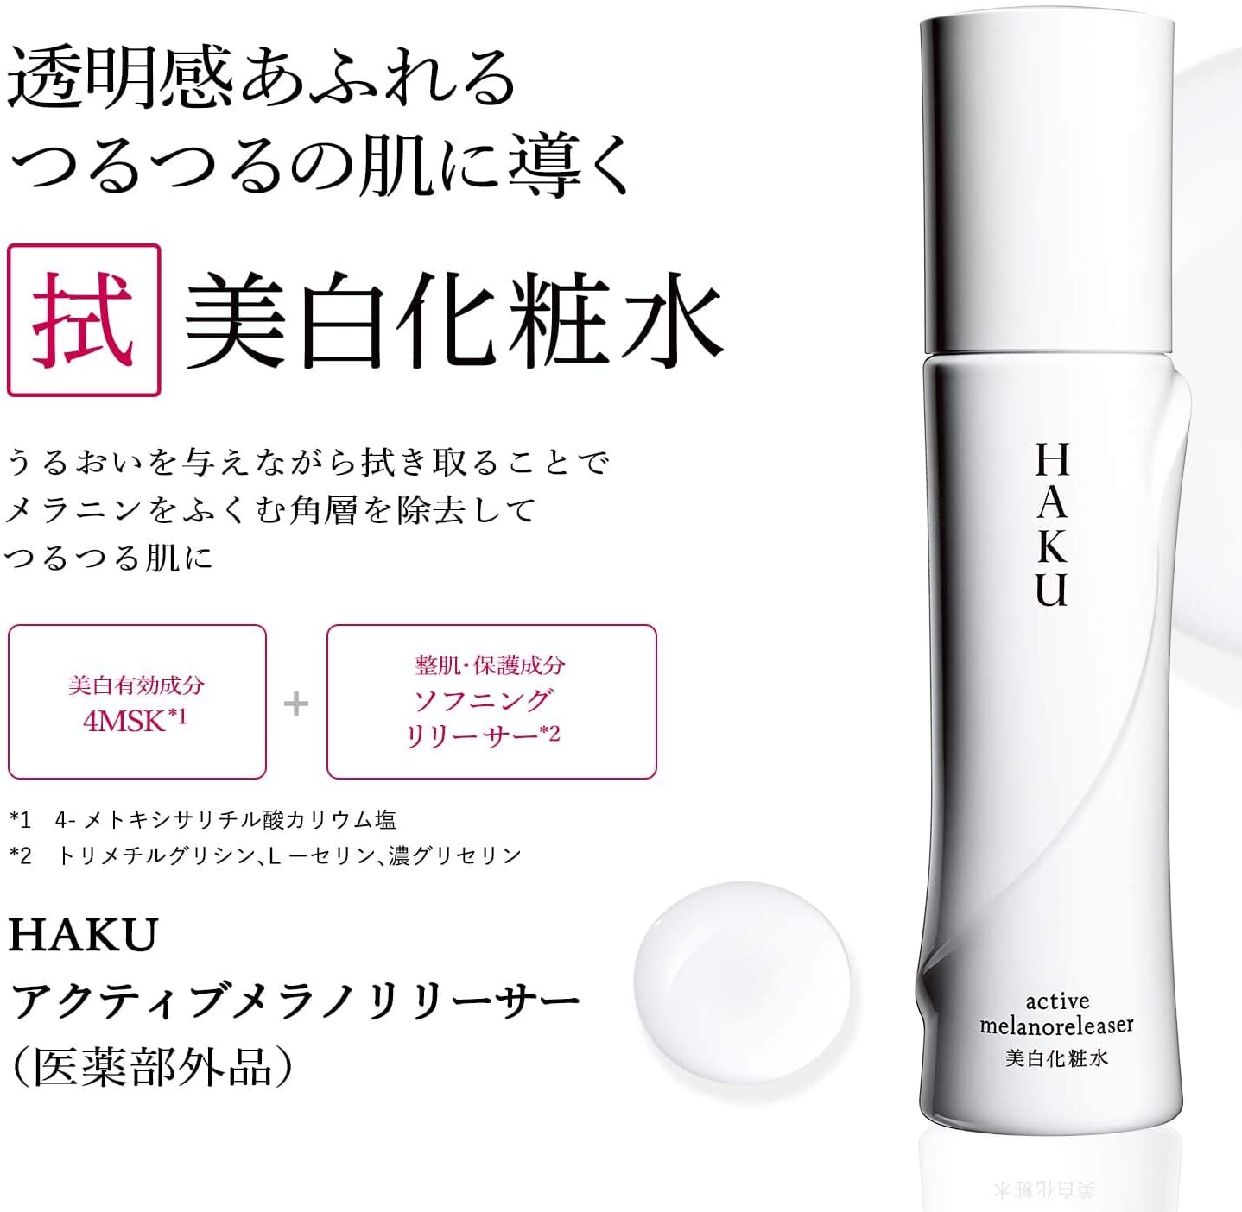 HAKU(ハク) アクティブメラノリリーサー 美白化粧水の商品画像6 